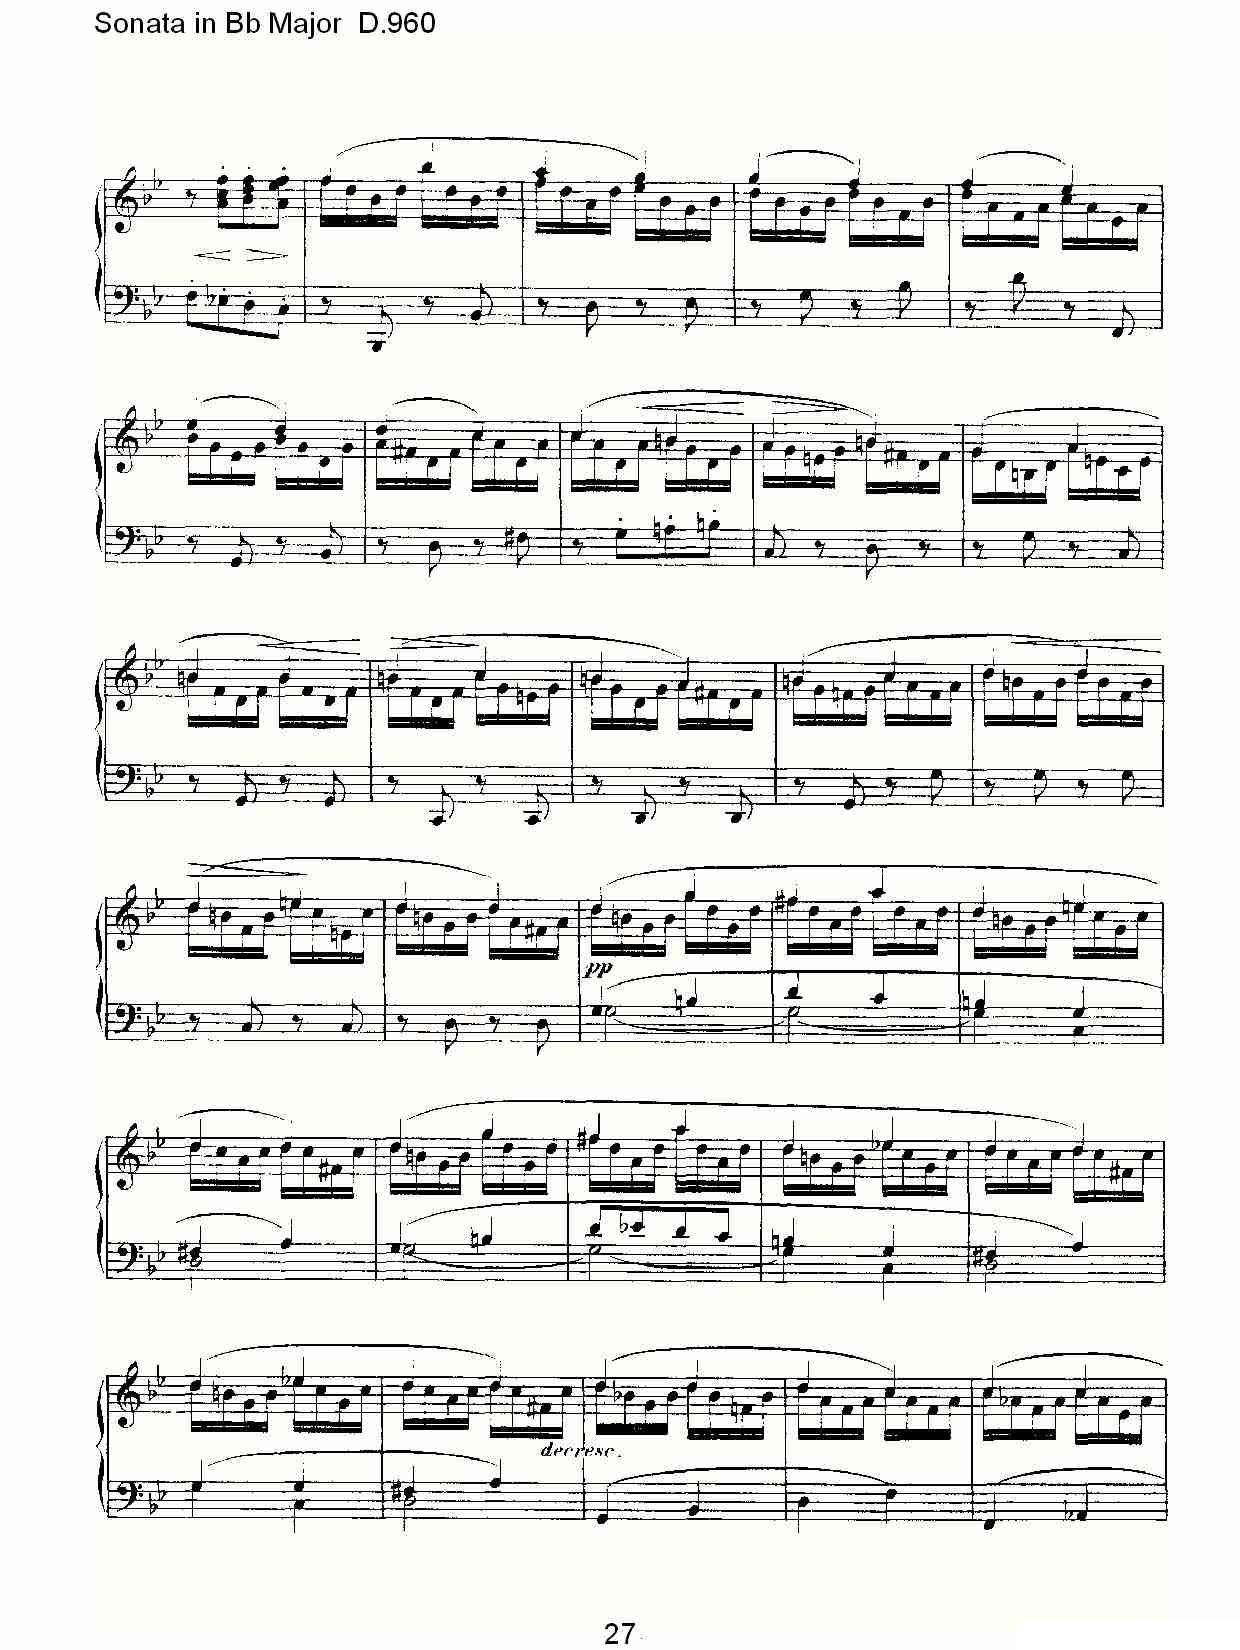 Sonata in Bb Major D.960（Bb大调奏鸣曲 D.960）钢琴曲谱（图27）